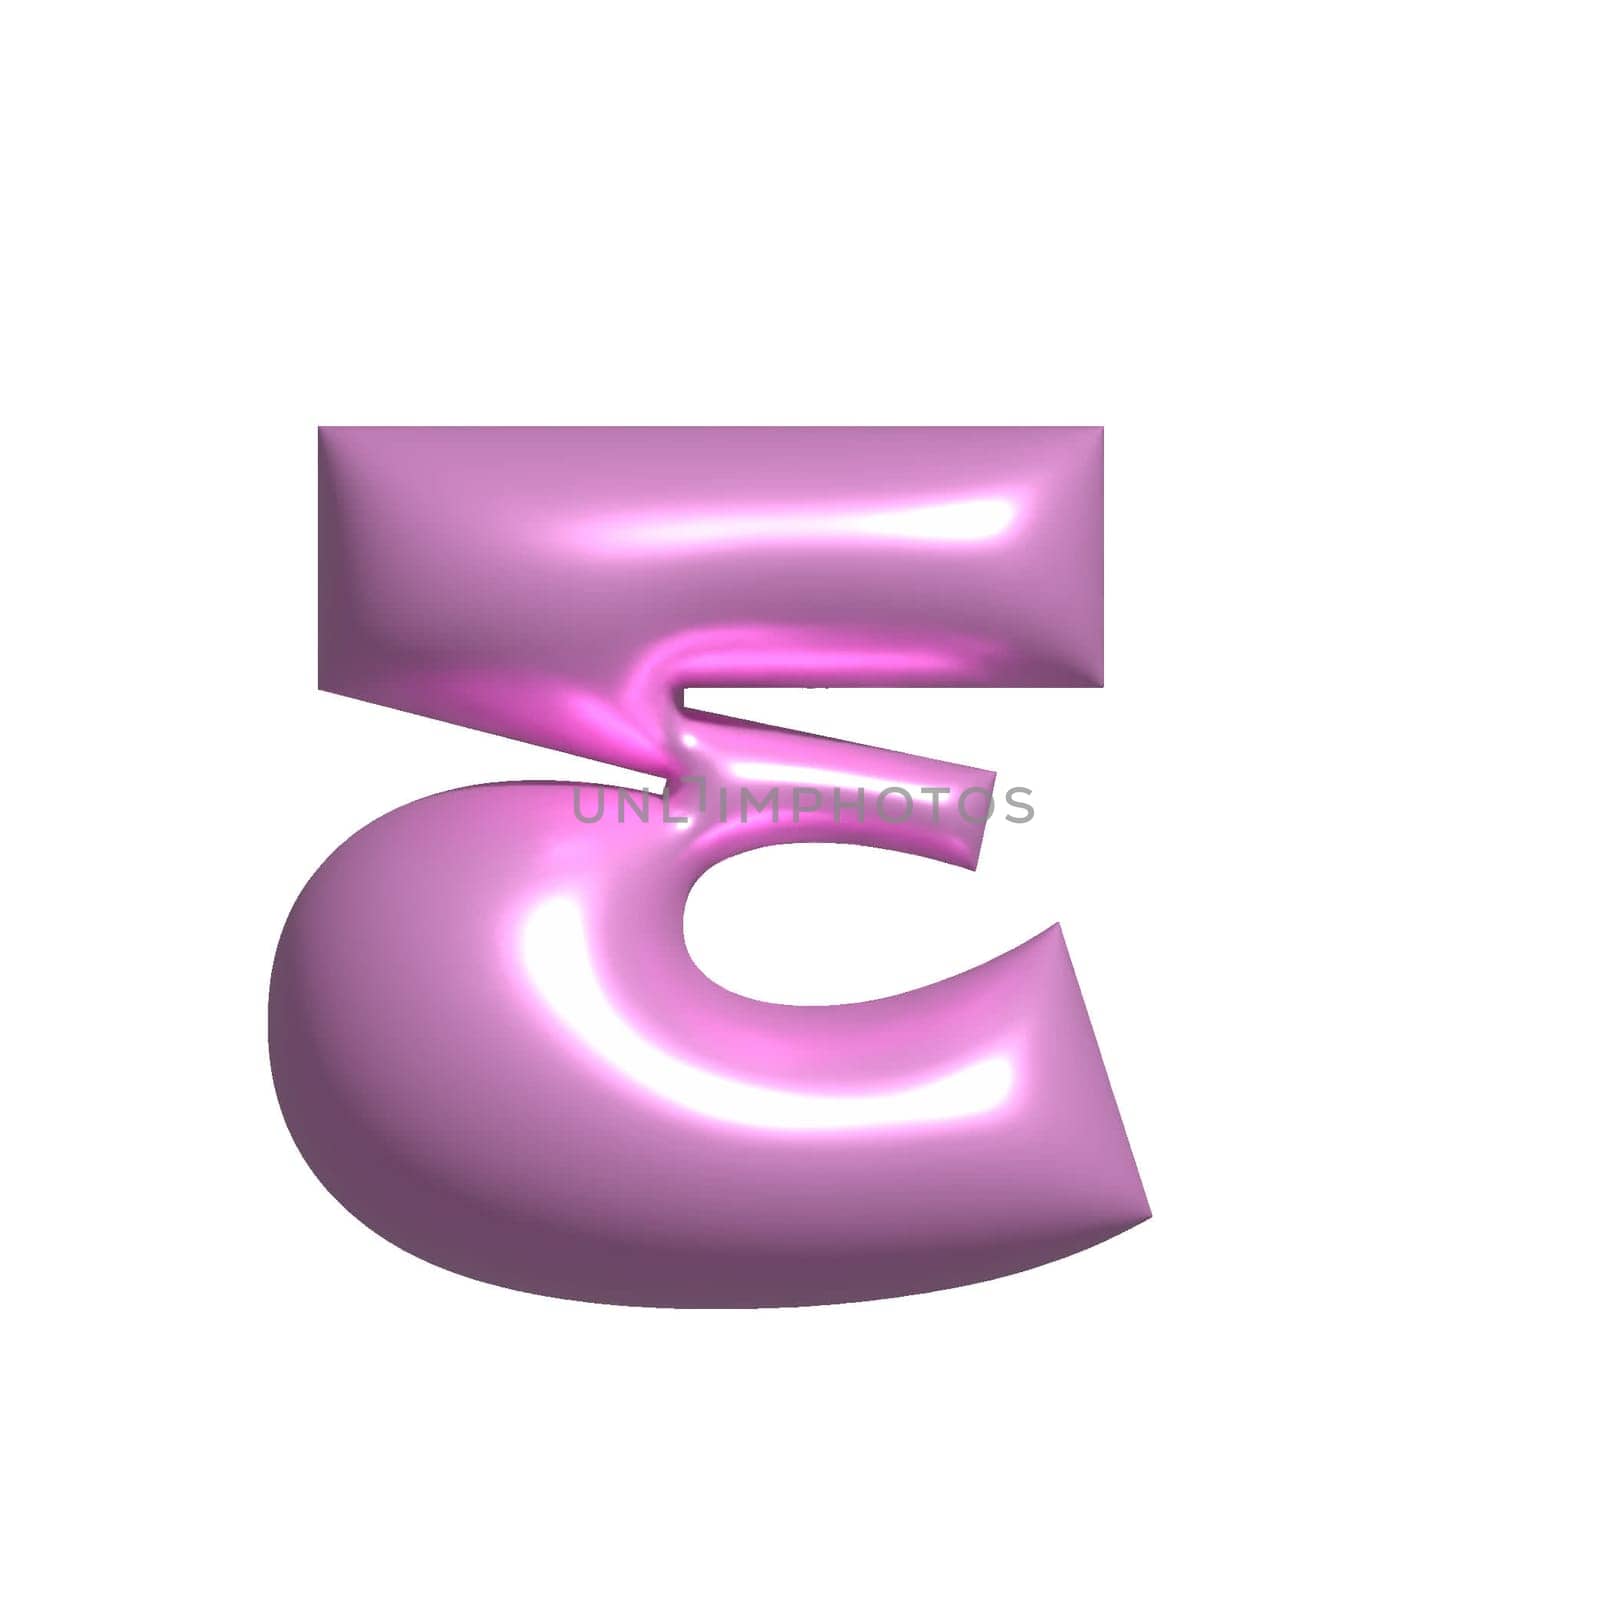 Pink shiny metal shiny reflective letter E 3D illustration